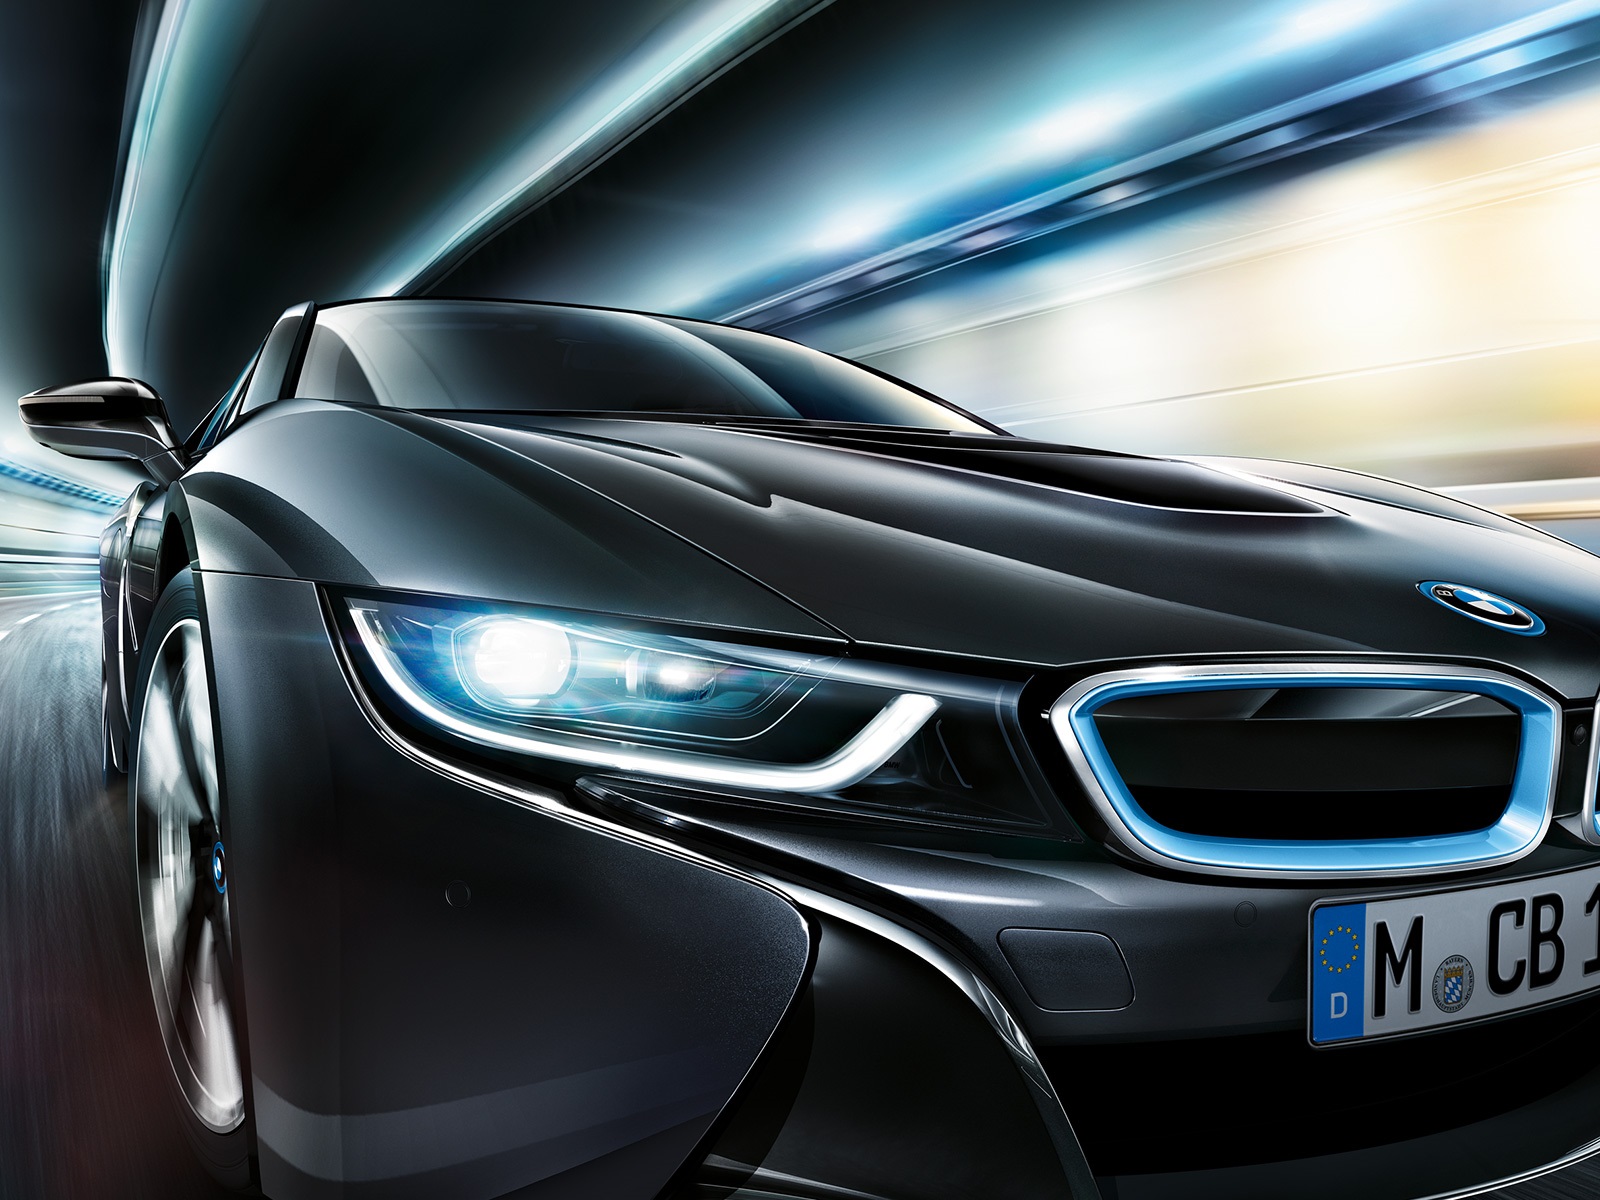 2014 Black BMW i8 LED Headlights inside Tunnel desktop wallpaper